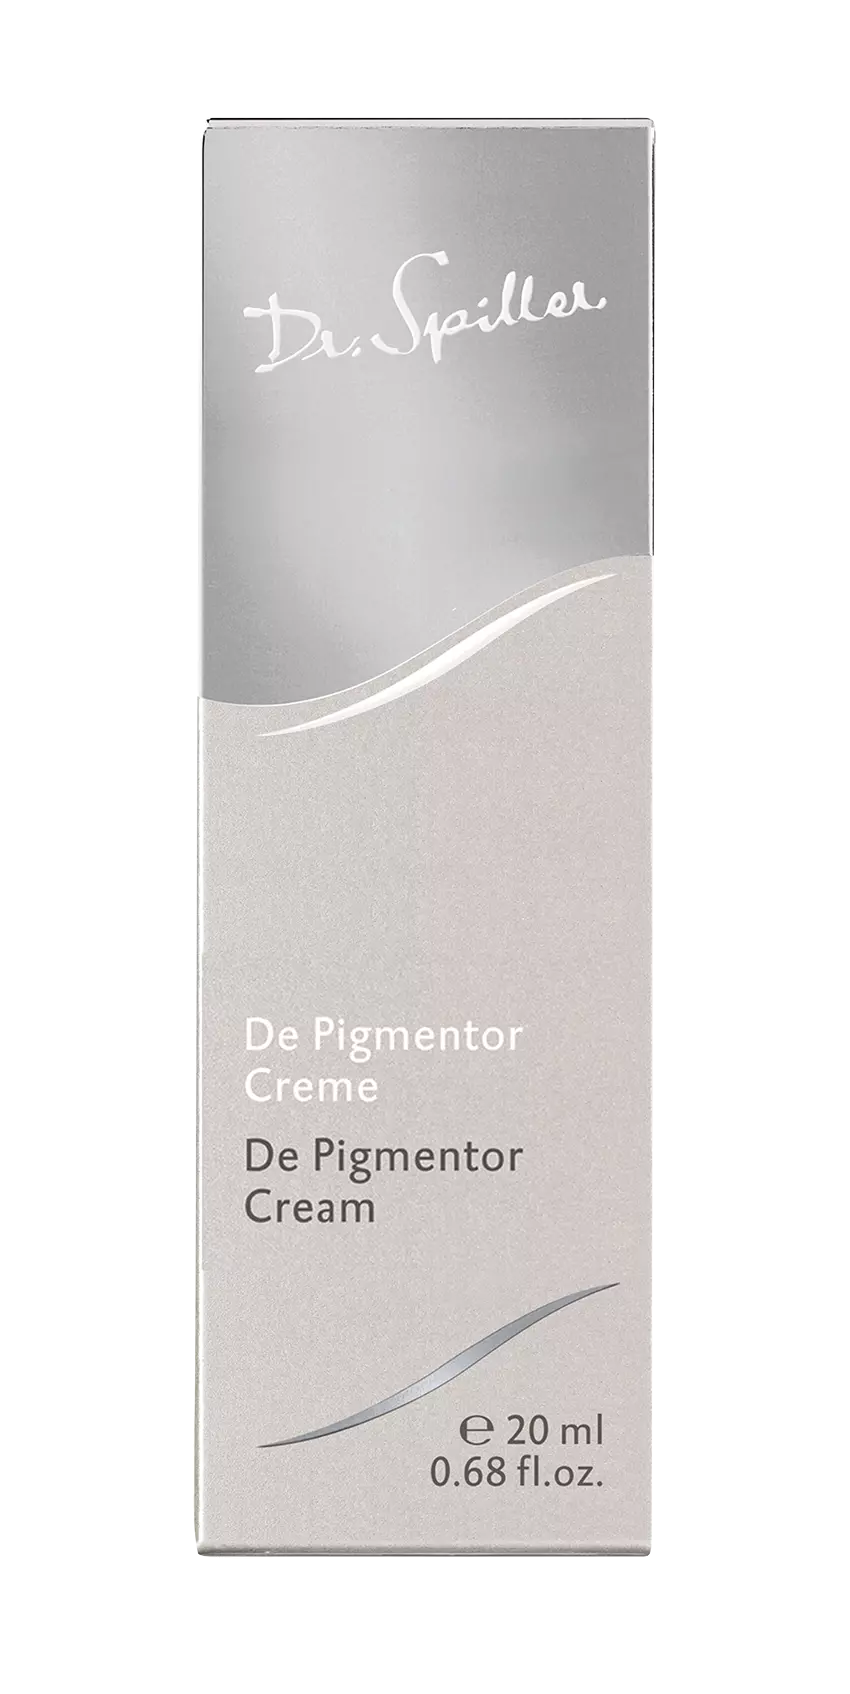 Dr. Spiller De Pigmentor Cream - Pigmentinis kremas